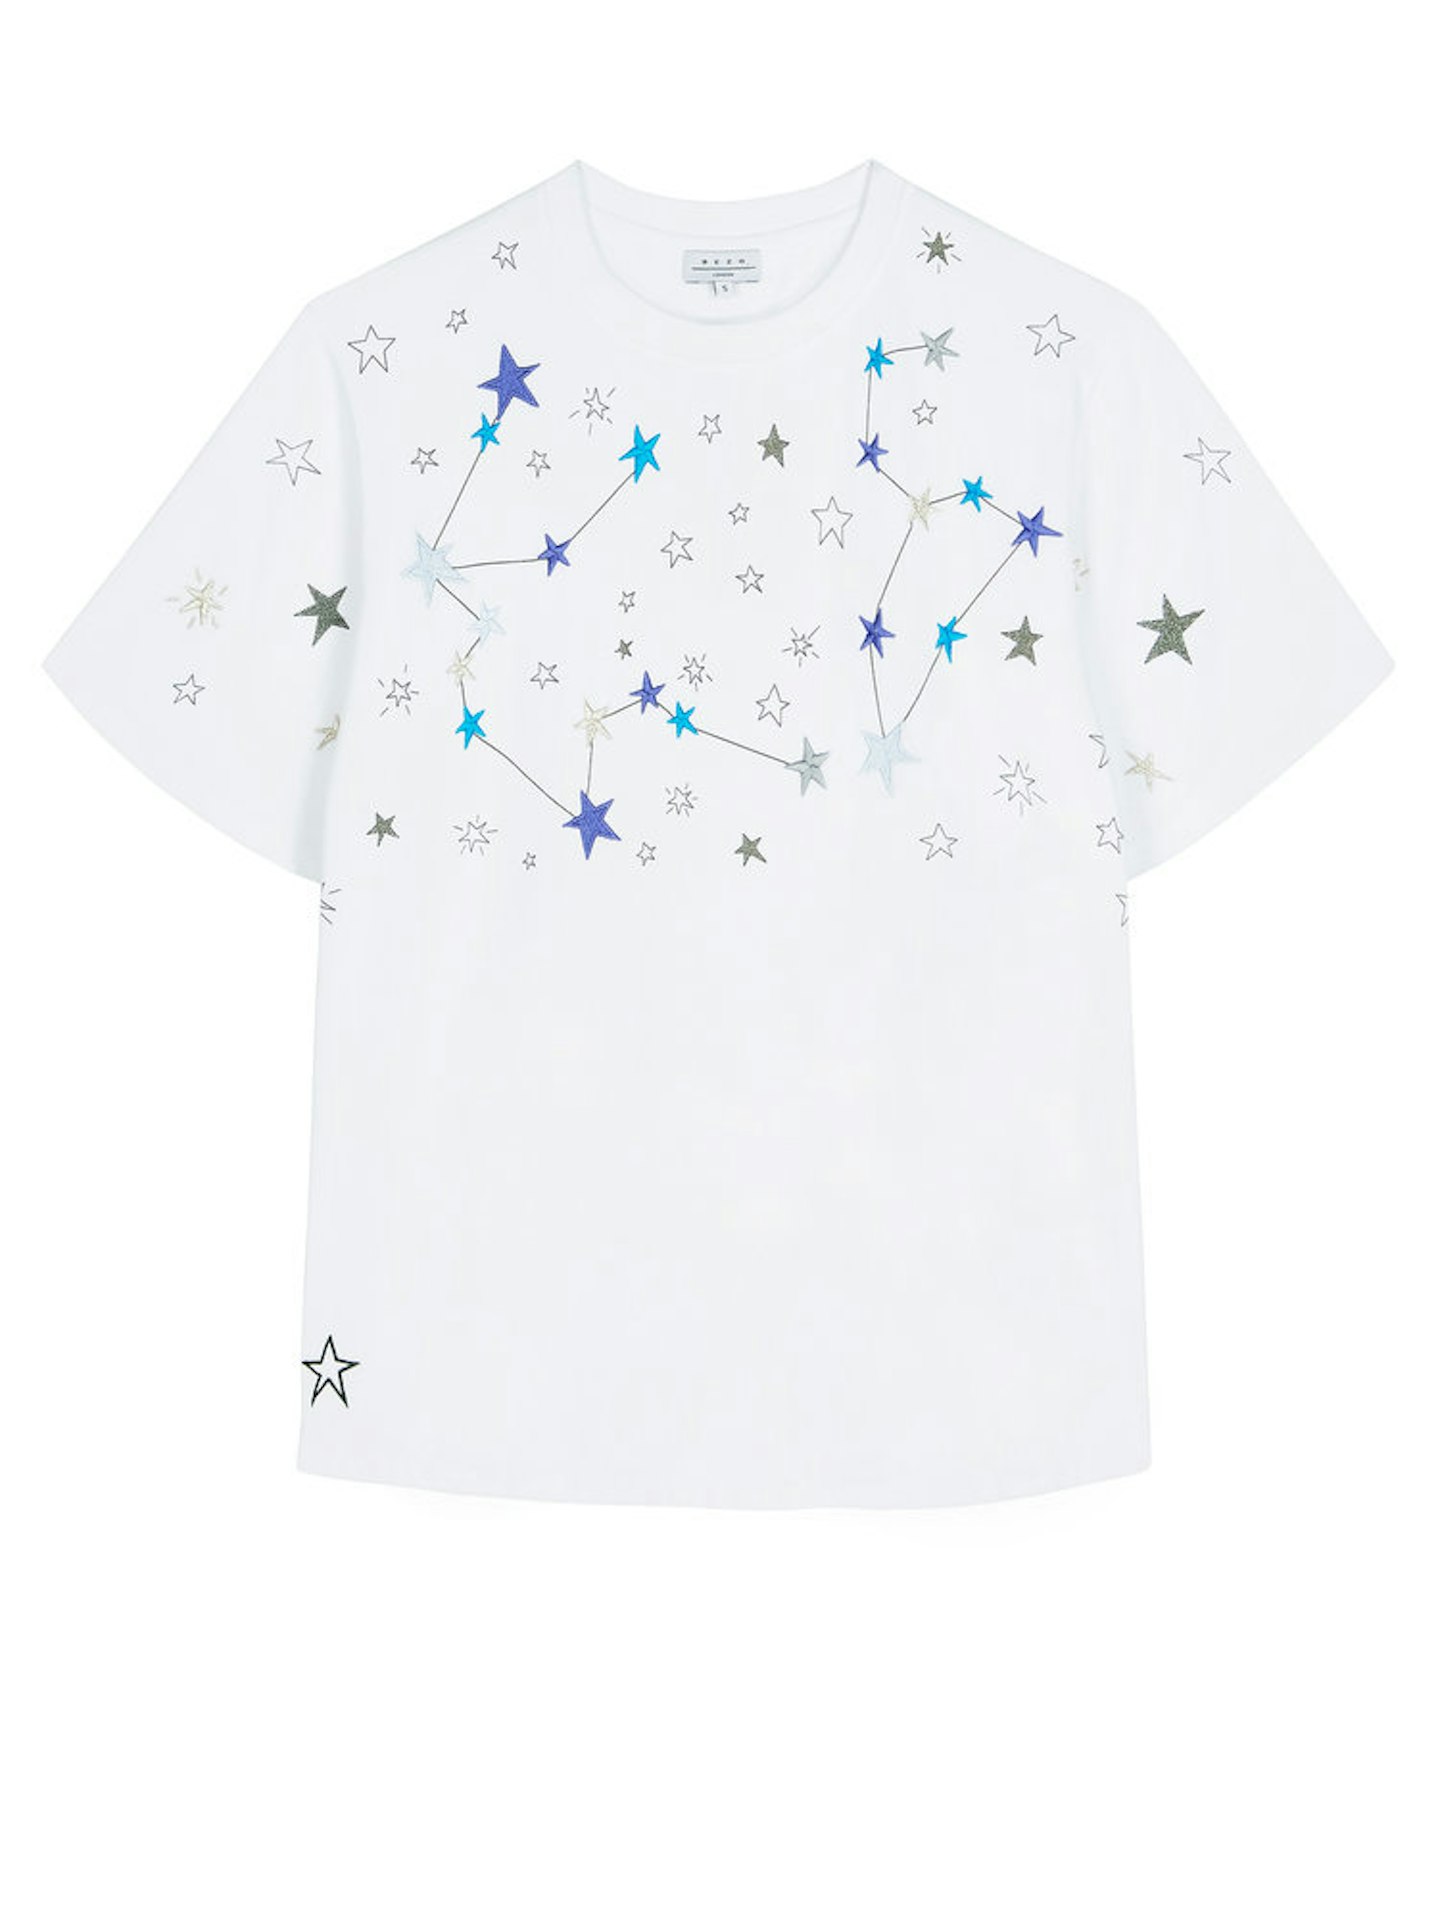 Bezo London, Relaxed Zodiac T-Shirt, £95